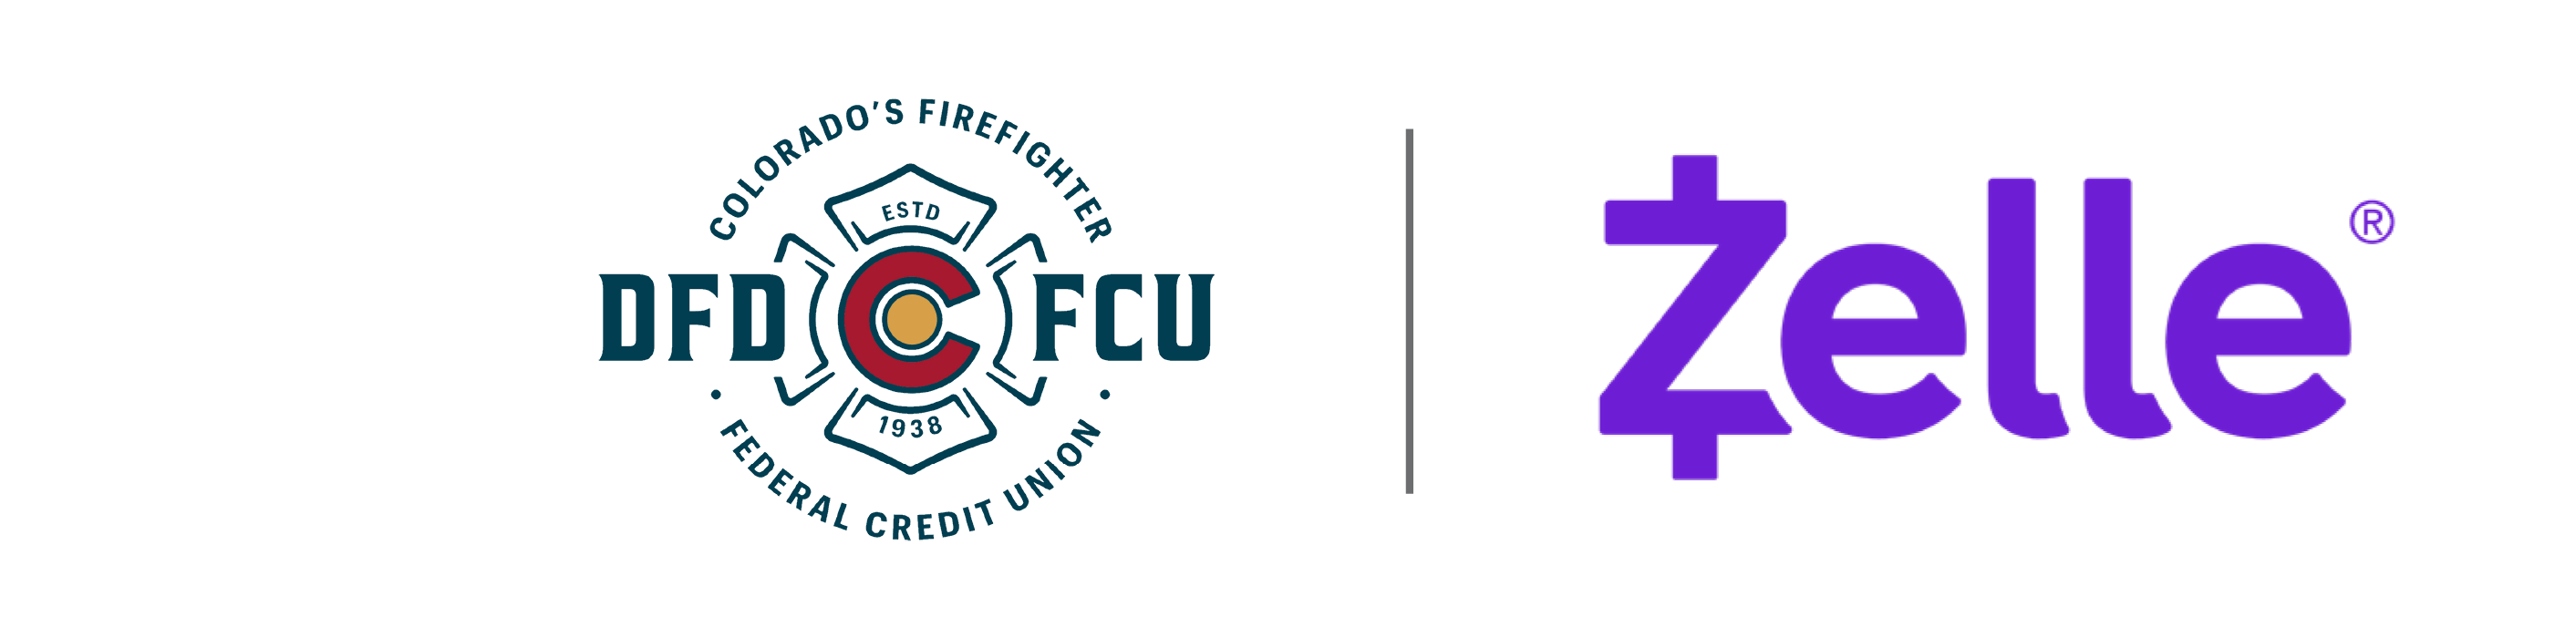 Zelle and DFDFCU Logo Lockup